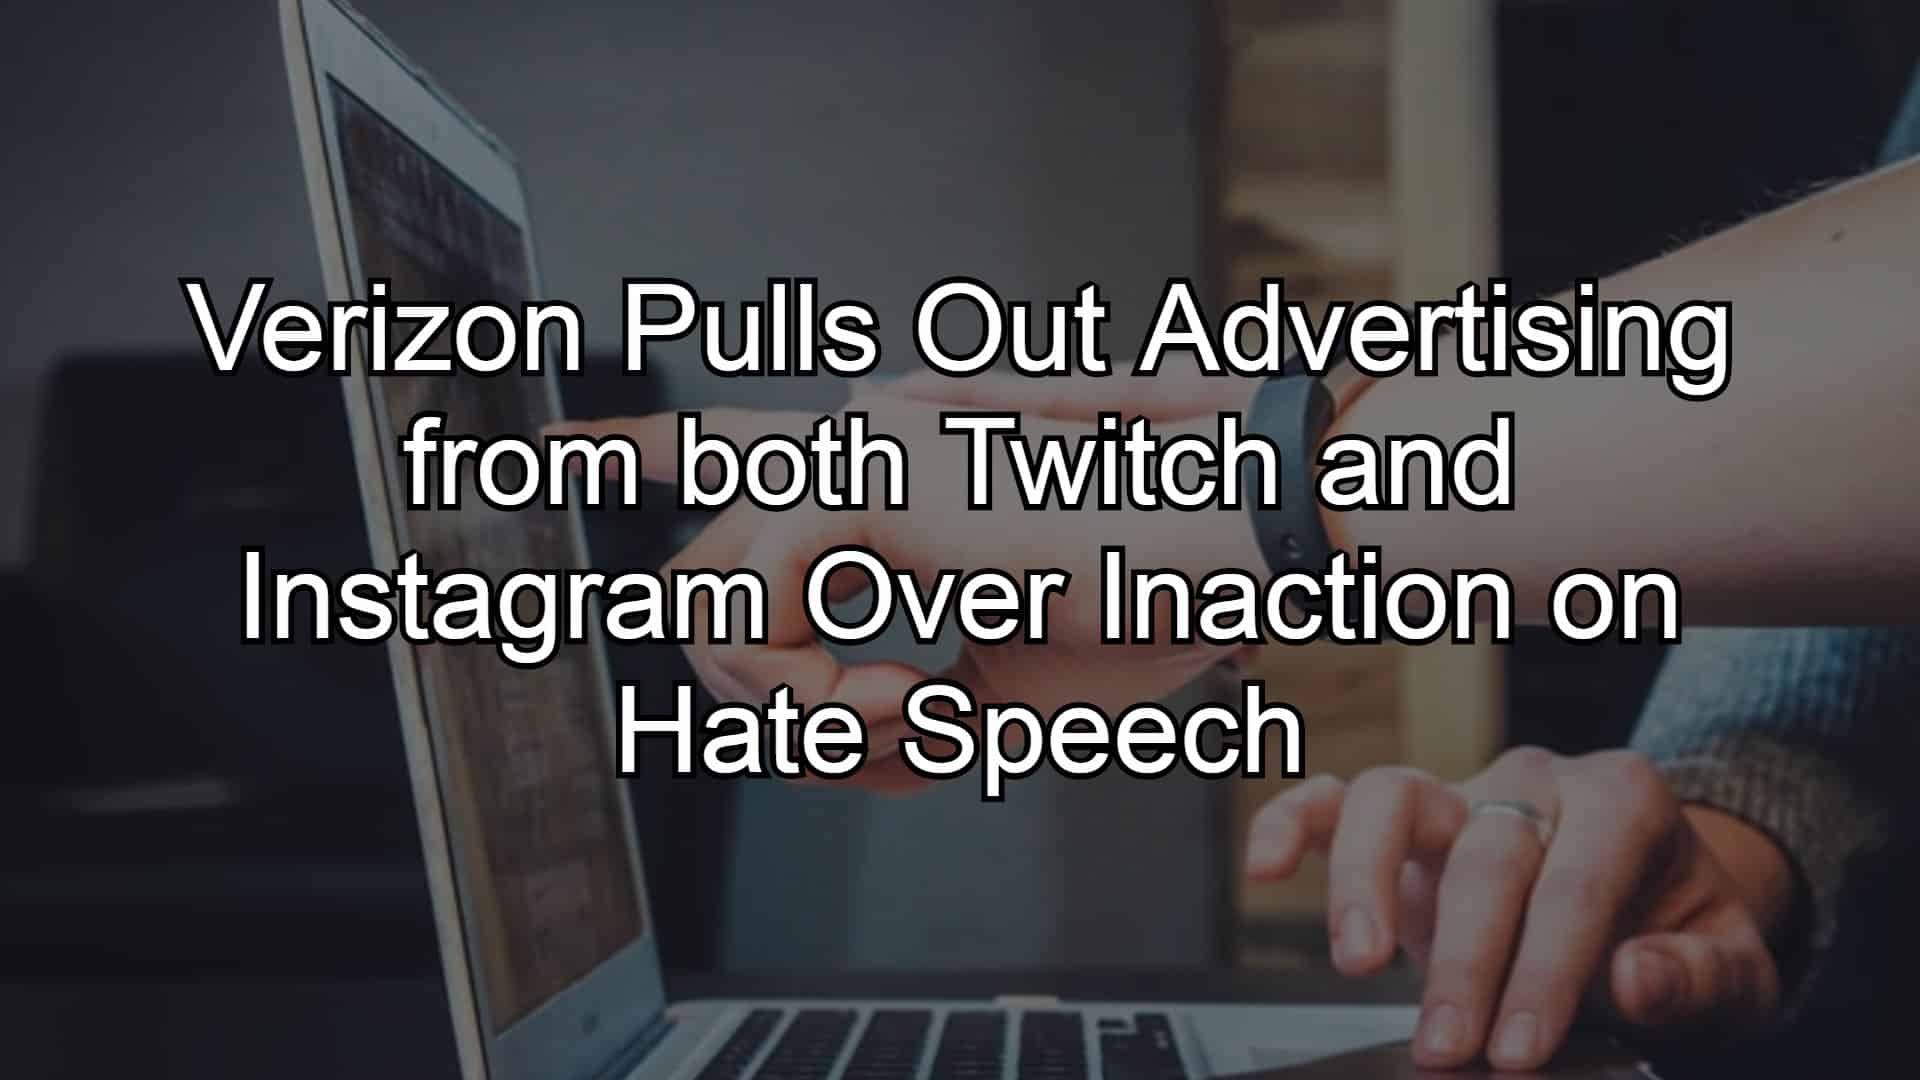 Verizon因对仇恨言论无所作为而从twitch和instagram撤出广告